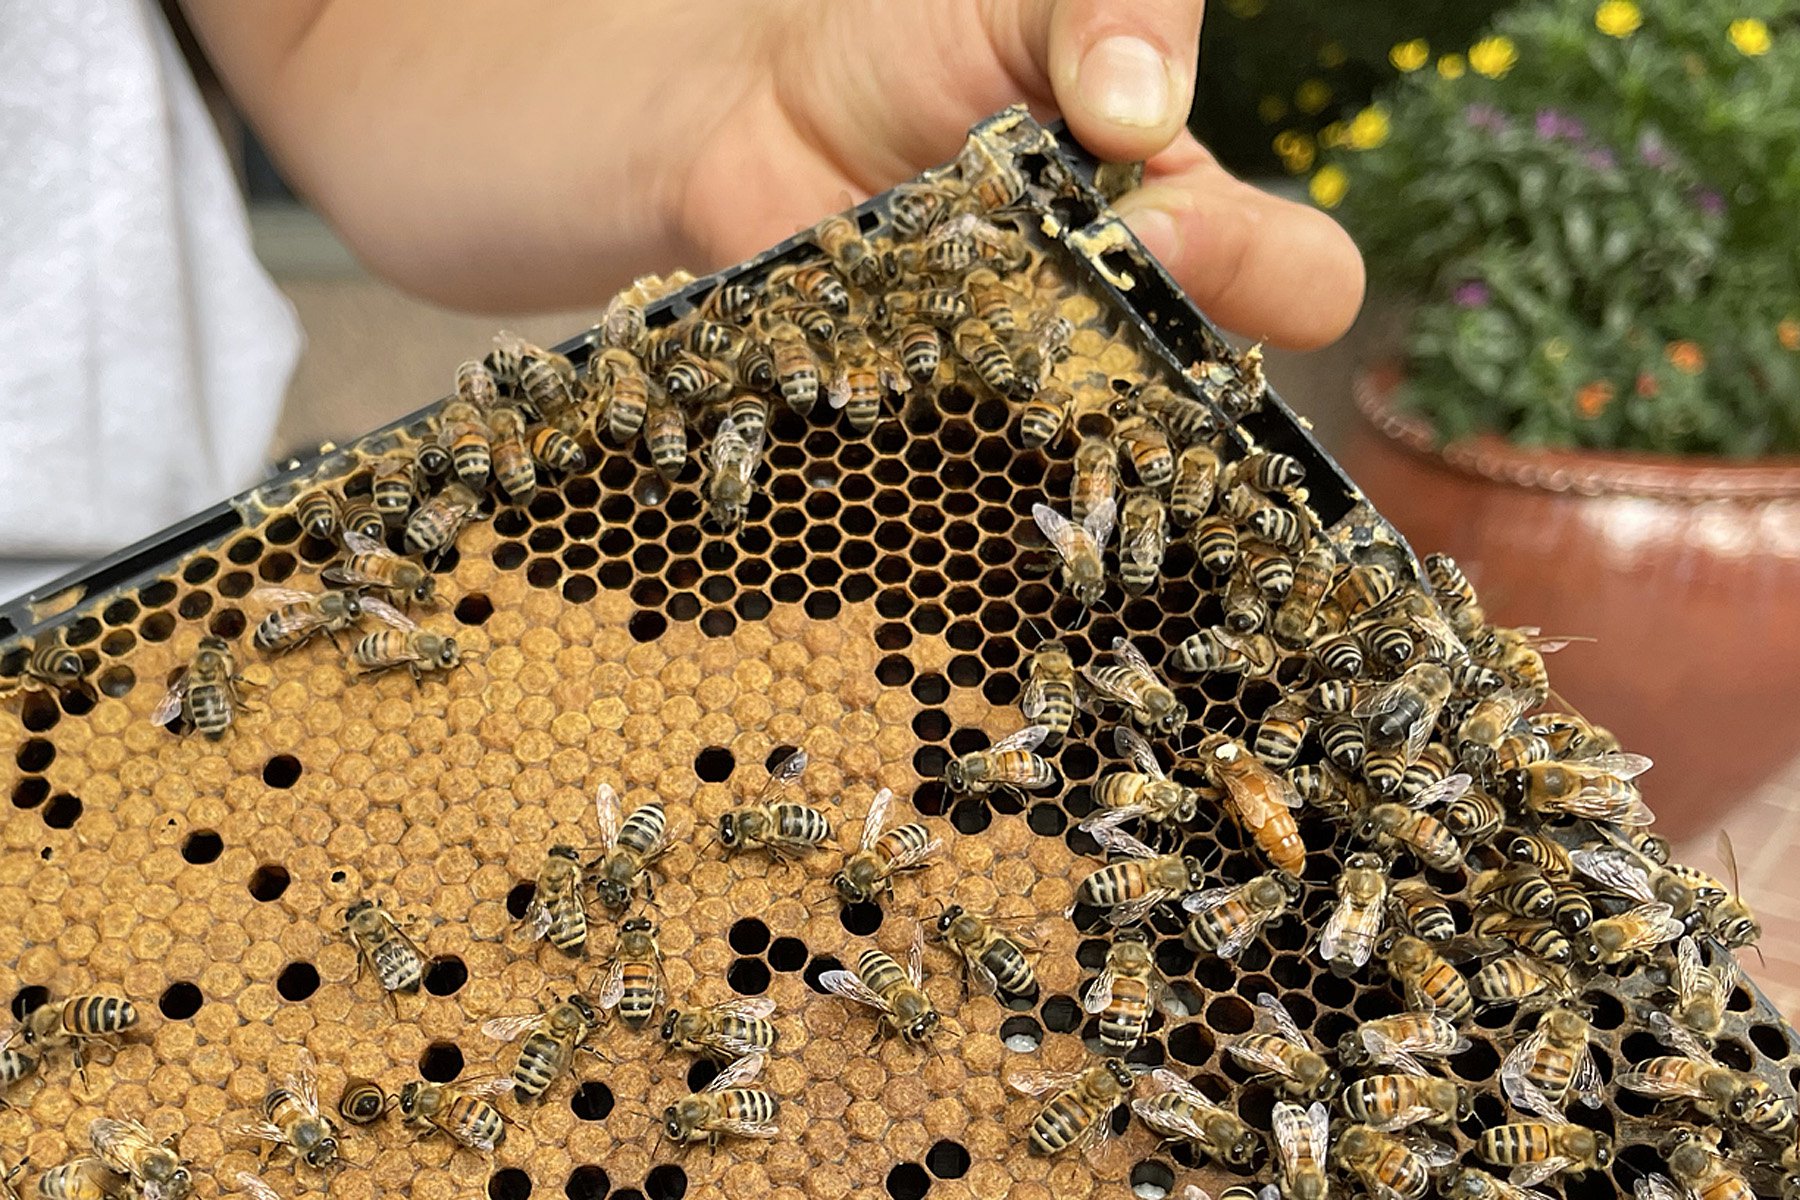 Urban beekeeping efforts create buzz in north Fort Worth